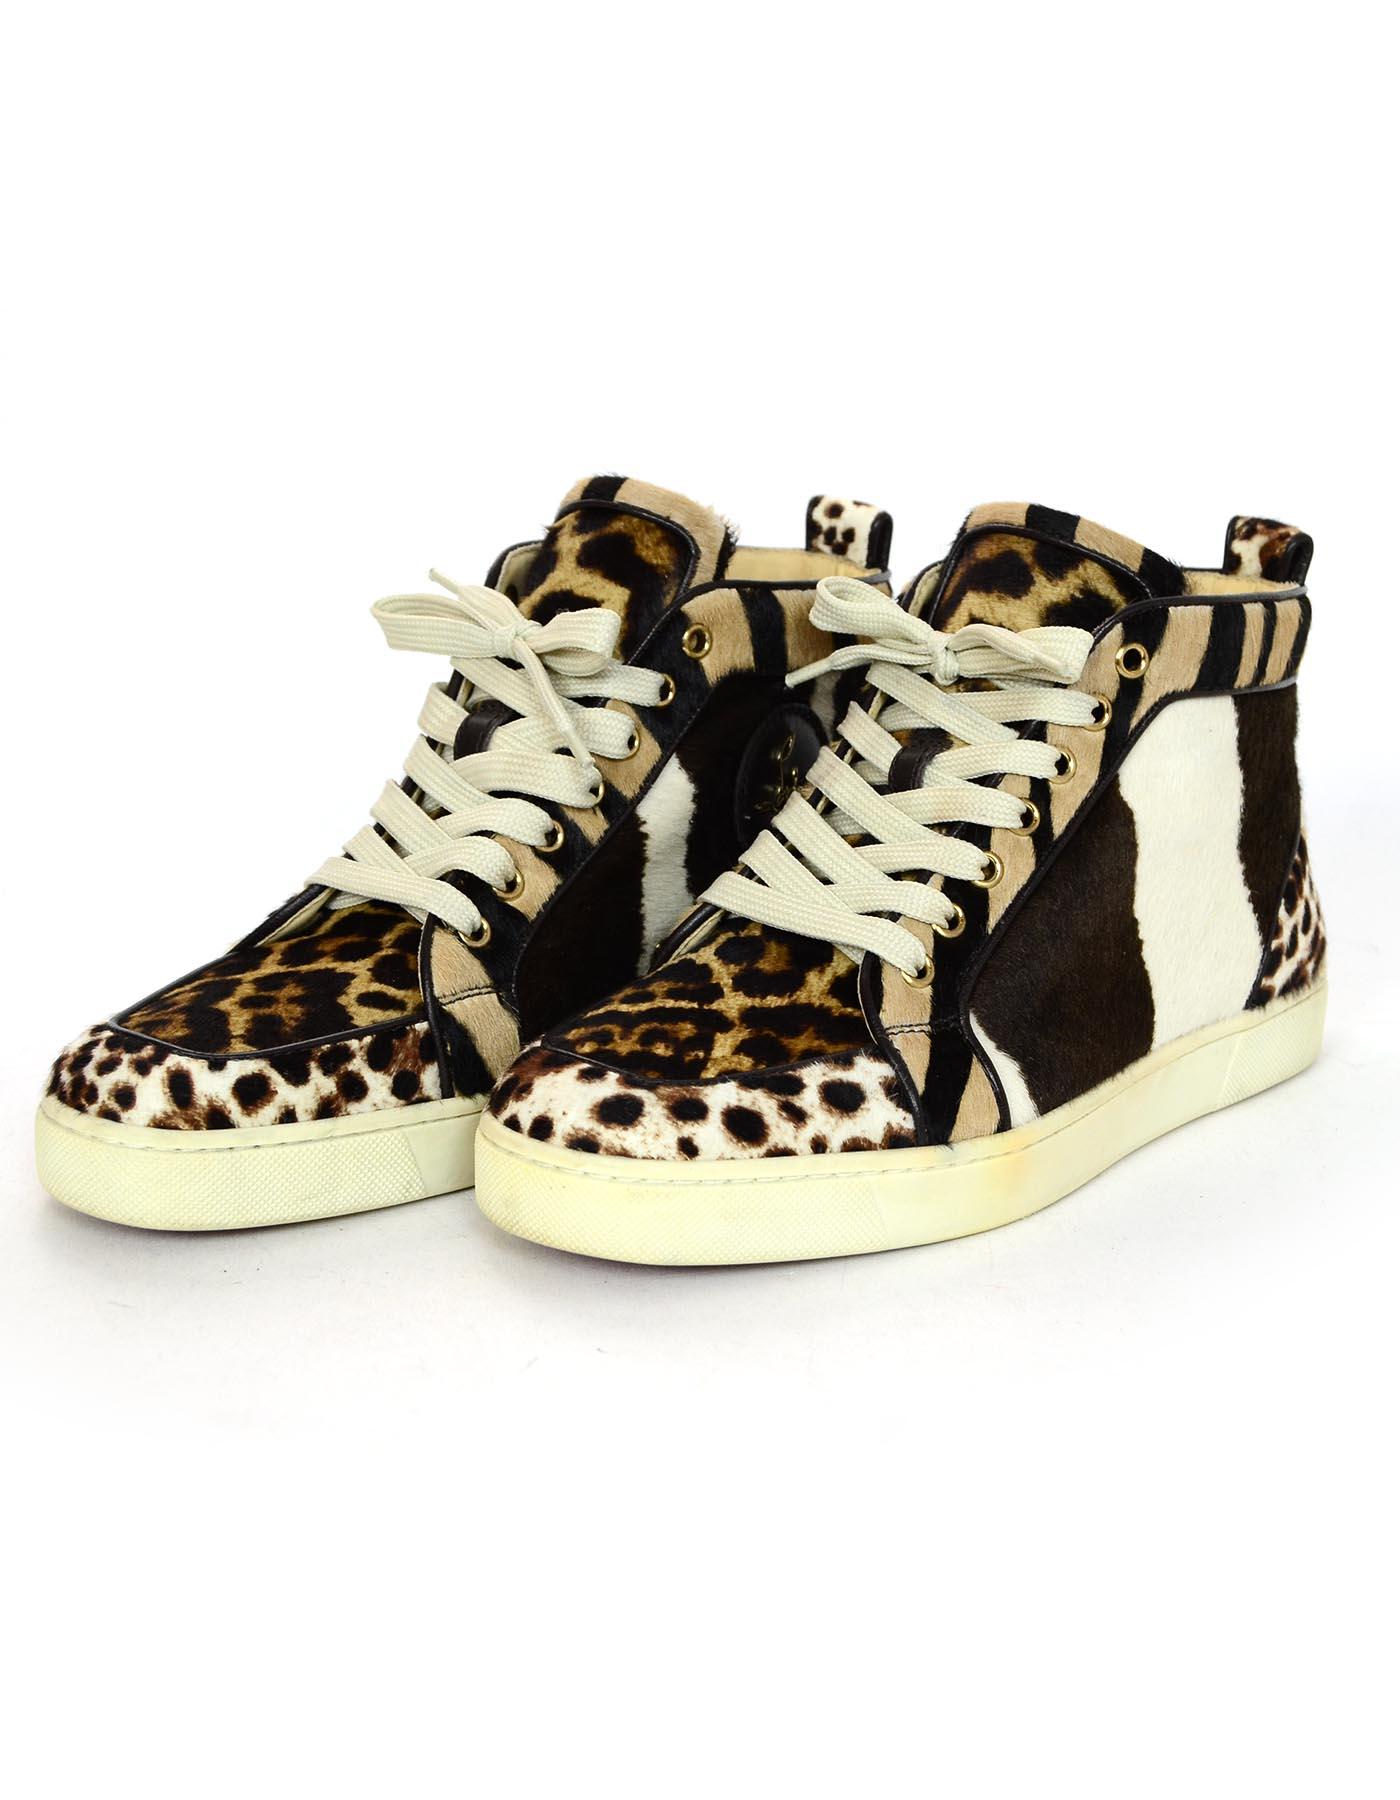 White Christian Louboutin Leopard Calfskin High Top Sneakers Sz 40